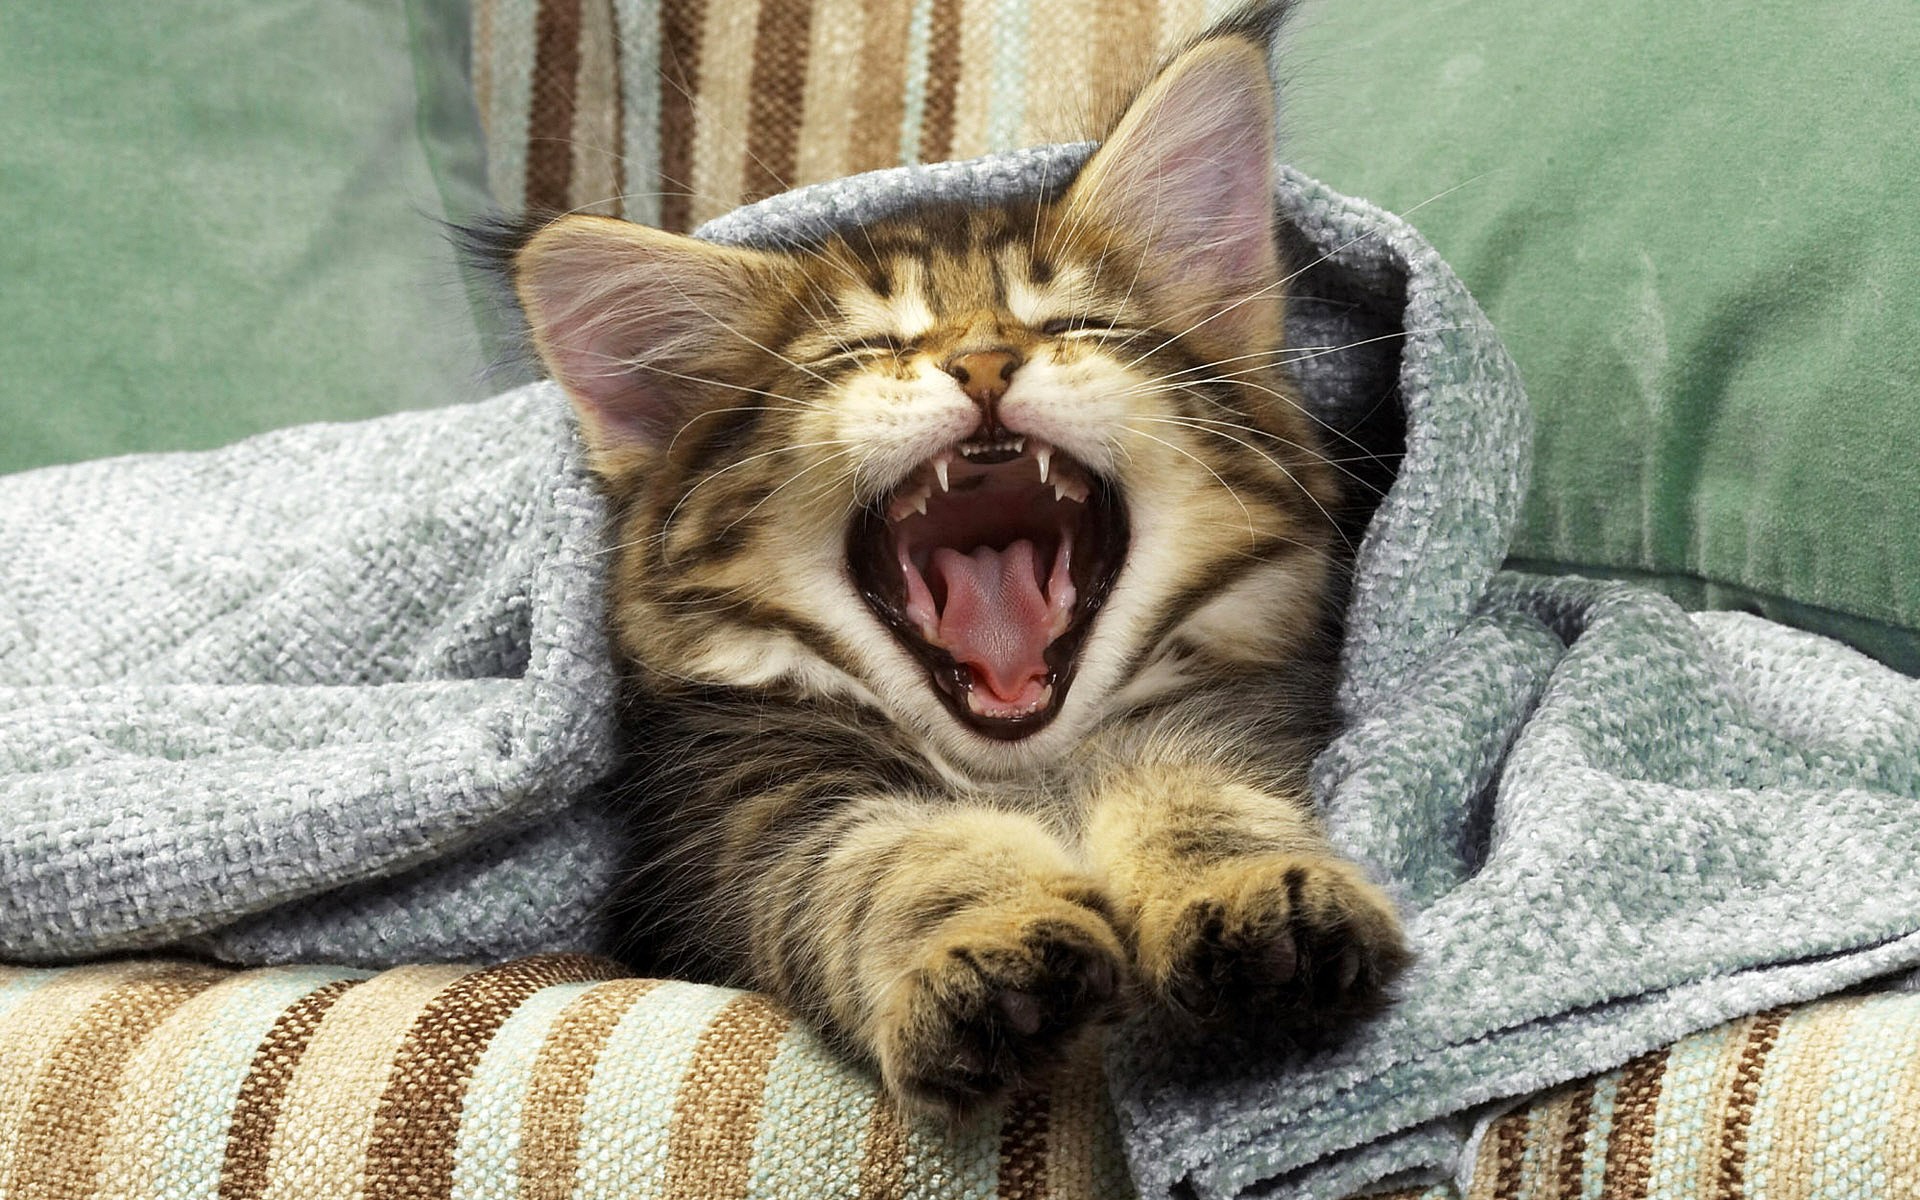 cats, animals, sweets (candies), yawns - desktop wallpaper